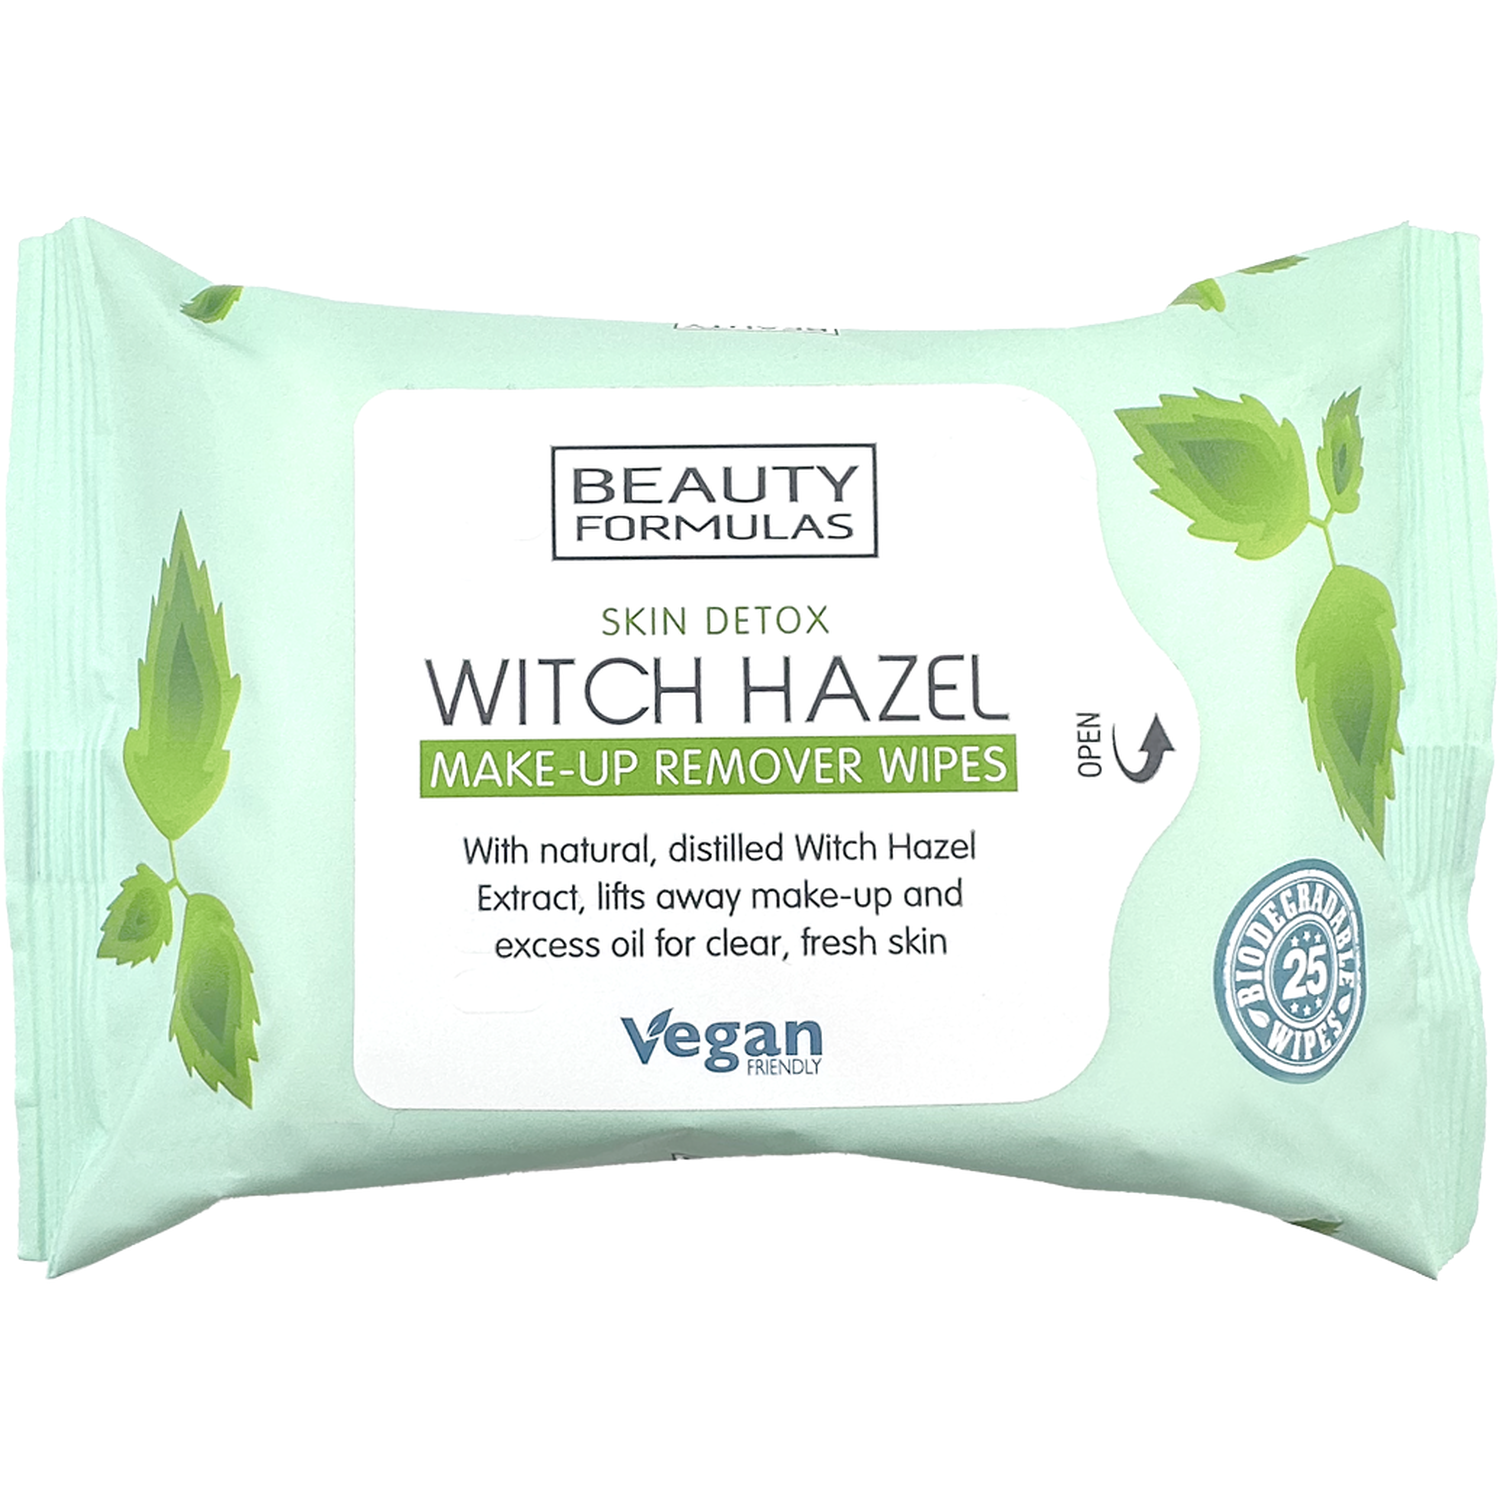 Beauty Formulas Skin Detox Witch Hazel Make-Up Remover Wipes - White Image